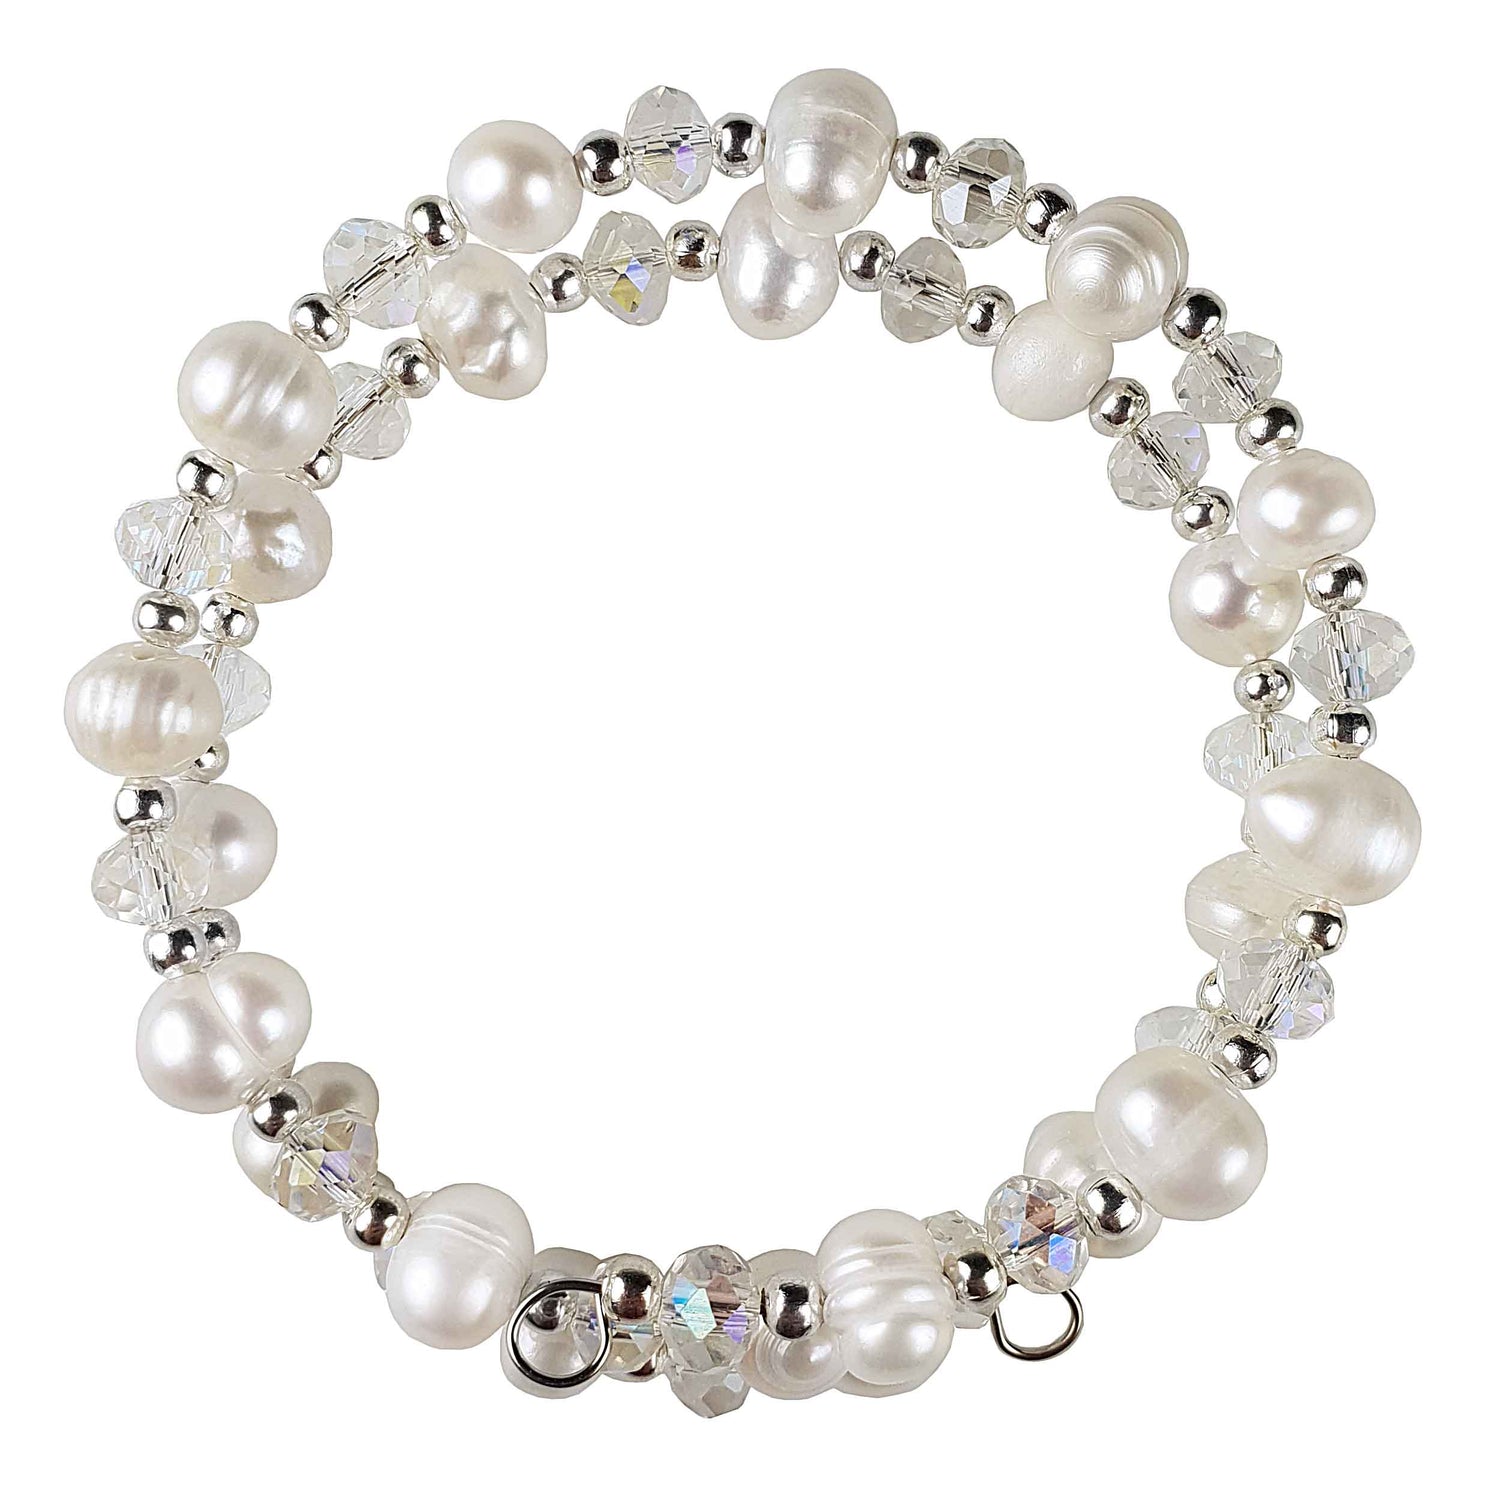 Zoetwater parel wikkel armband met witte parels en helder glas kristallen bovenaanzicht | Wrap Pearl White Crystal